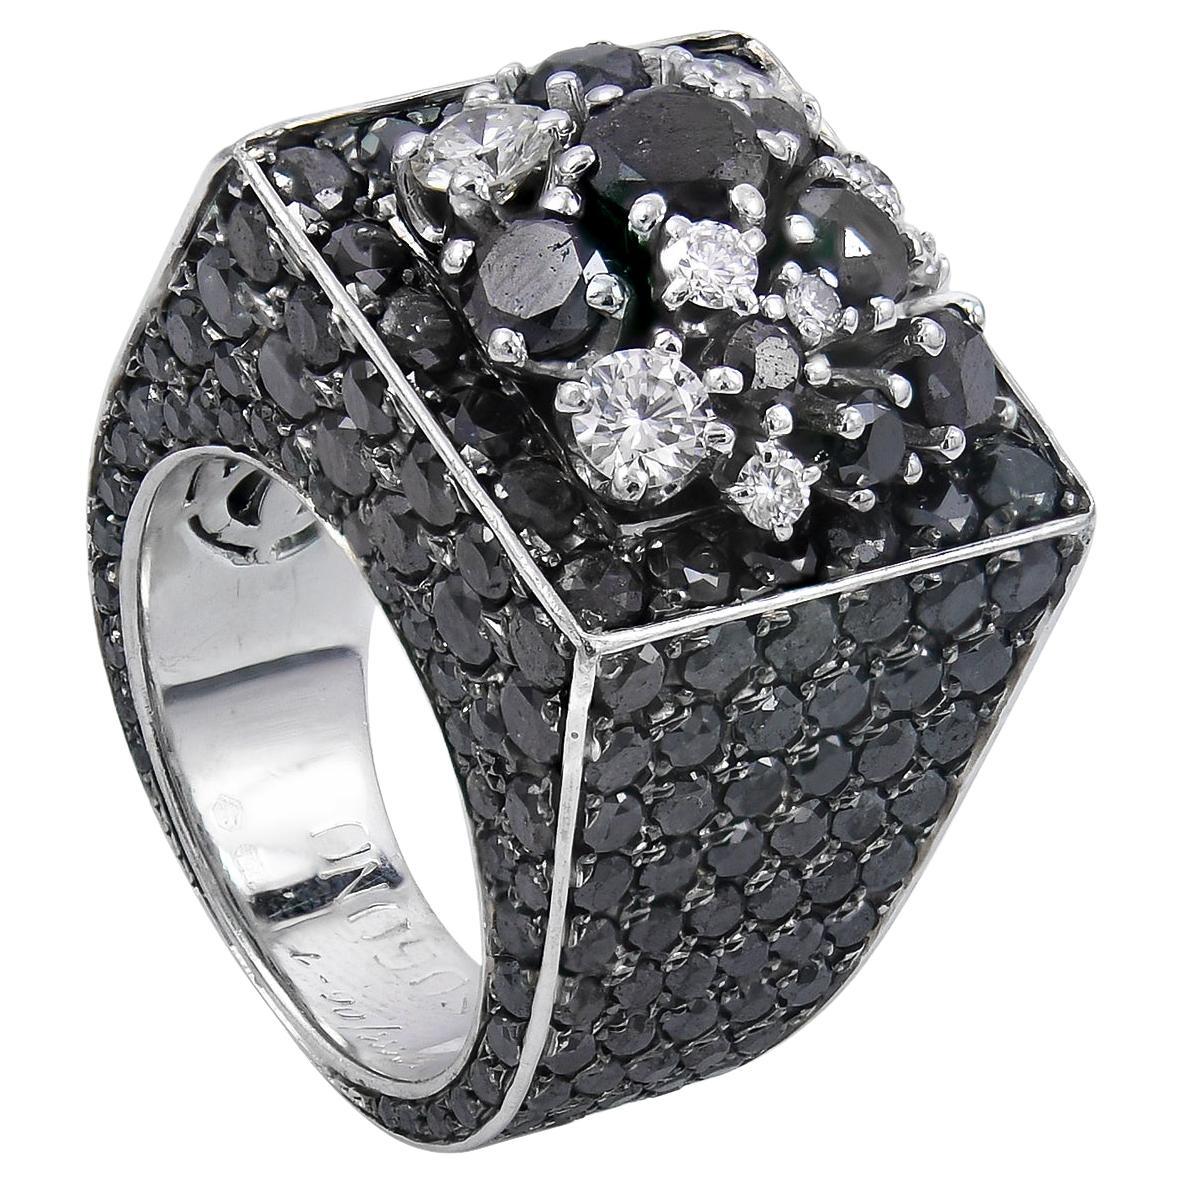 de GRISOGONO Black & White Diamond Cocktail Ring For Sale